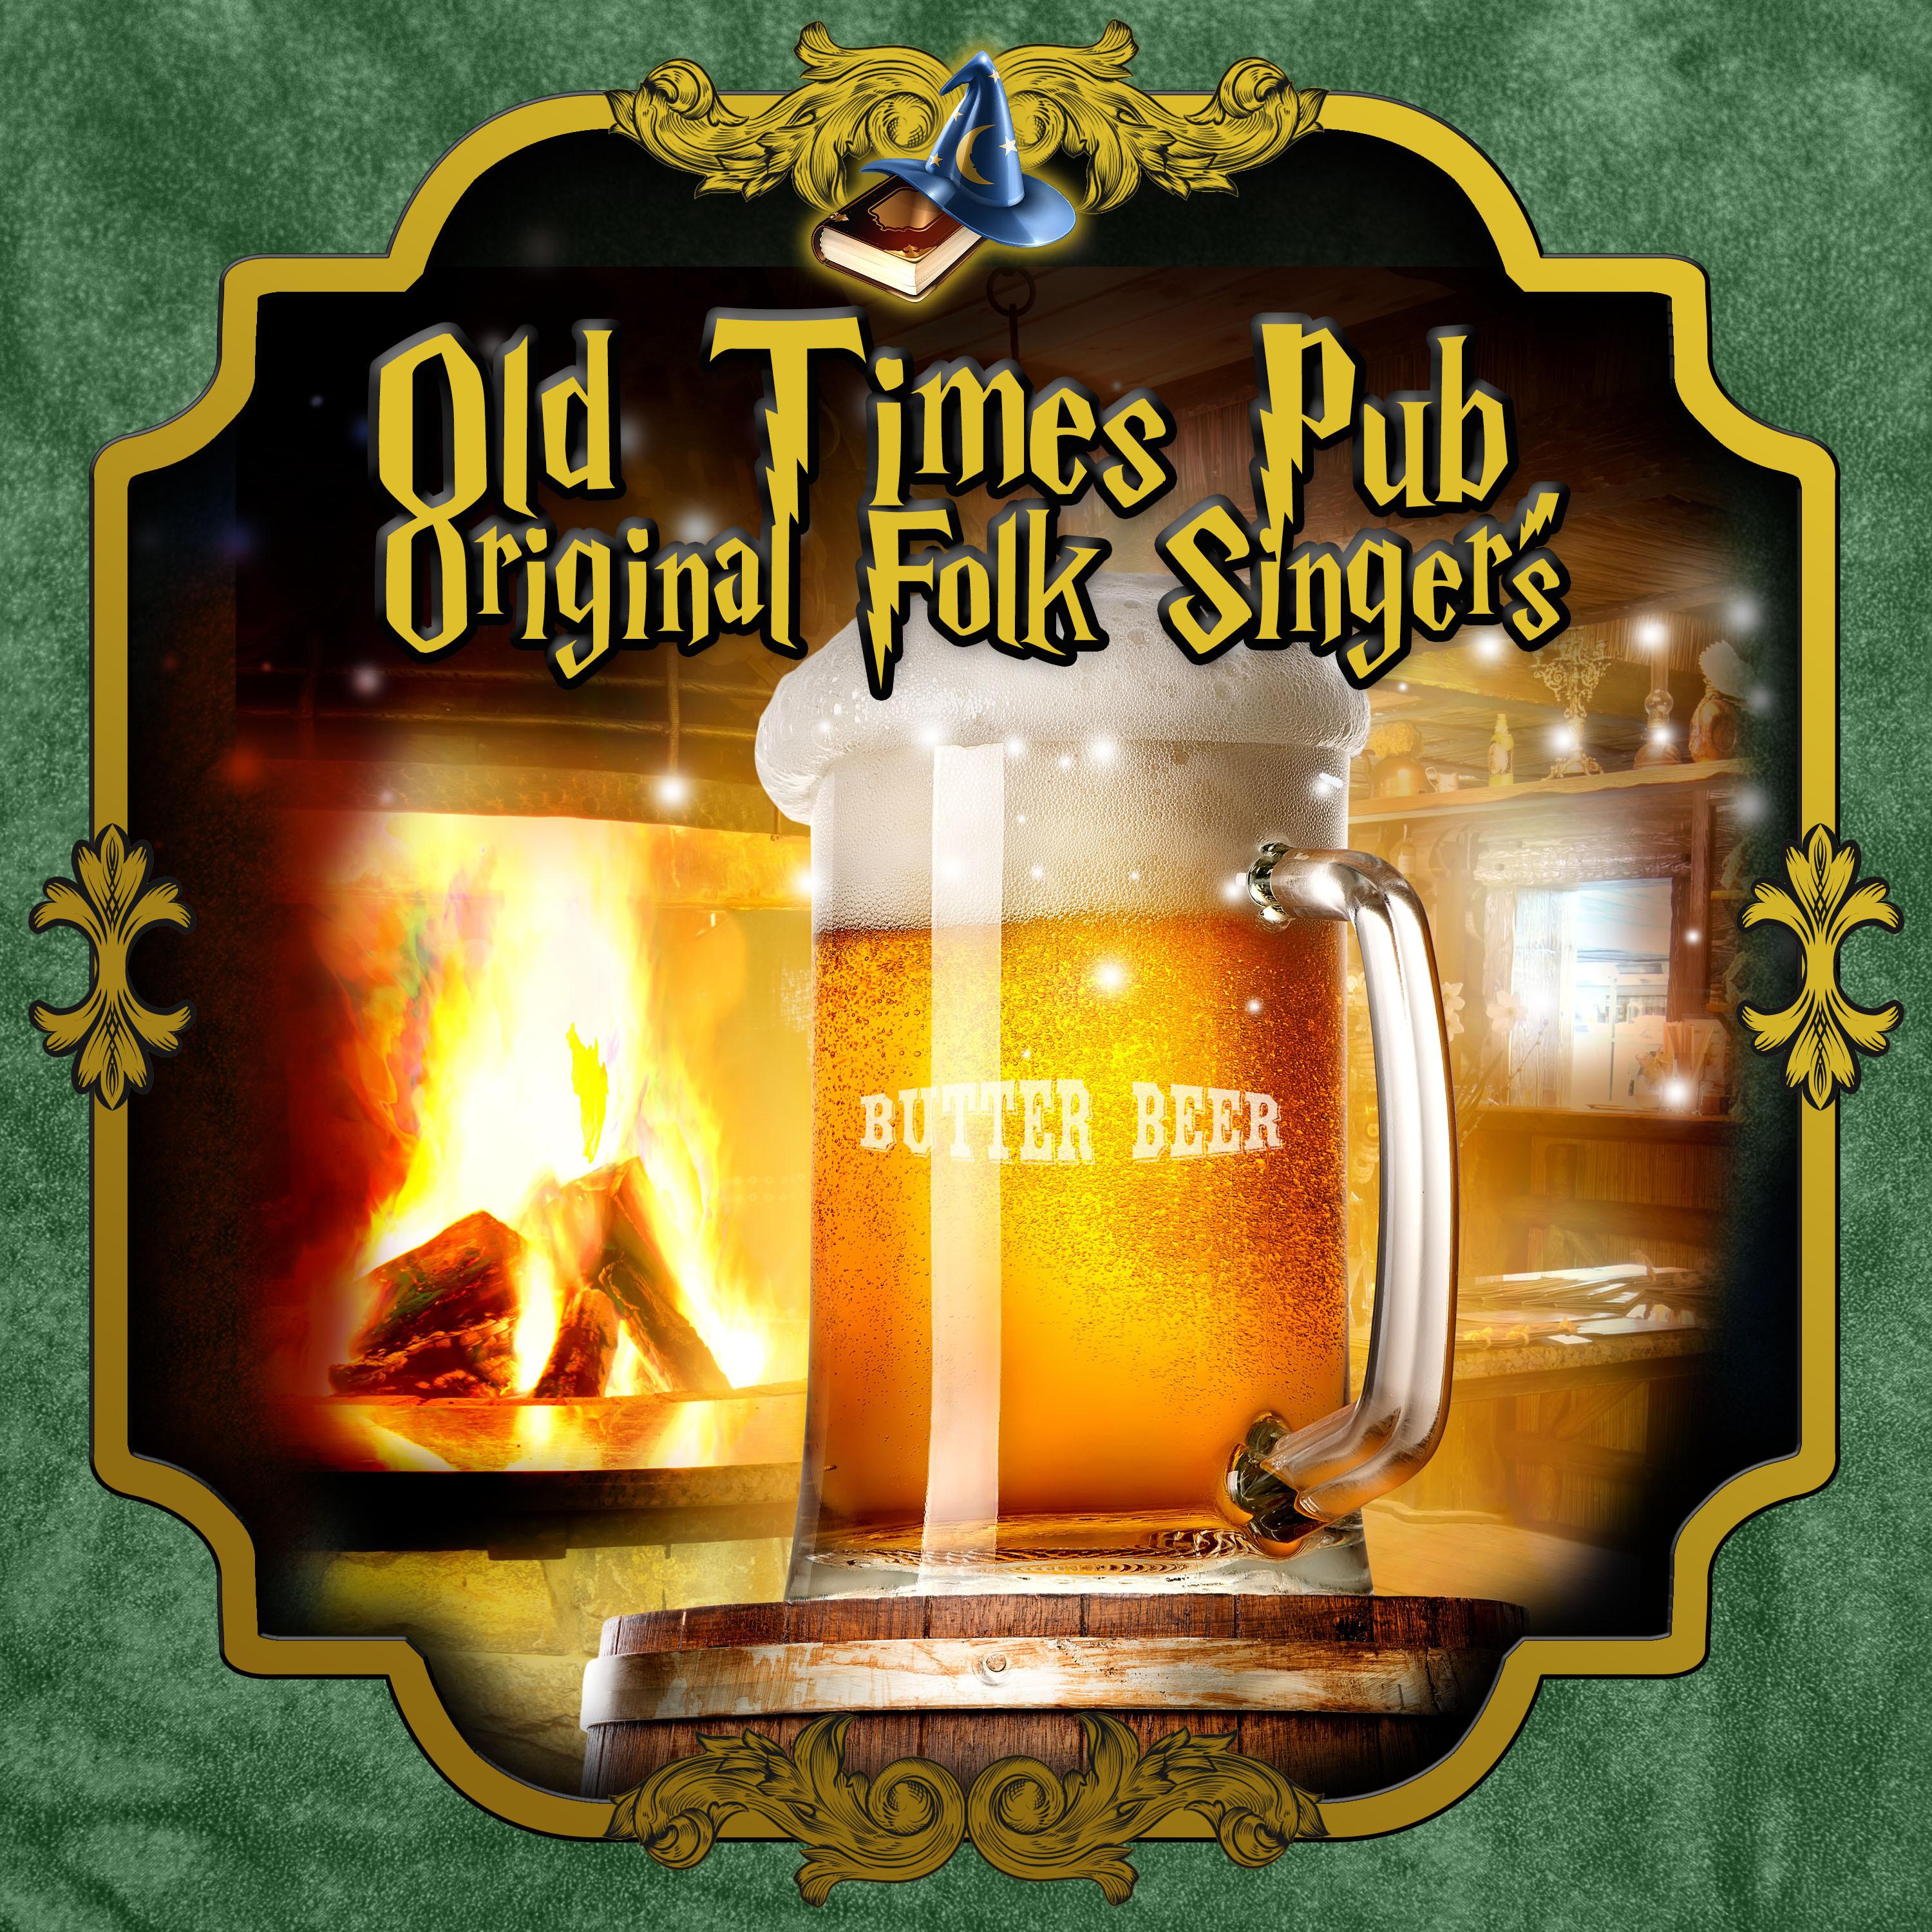 Old times Pub, Original Folk Singers